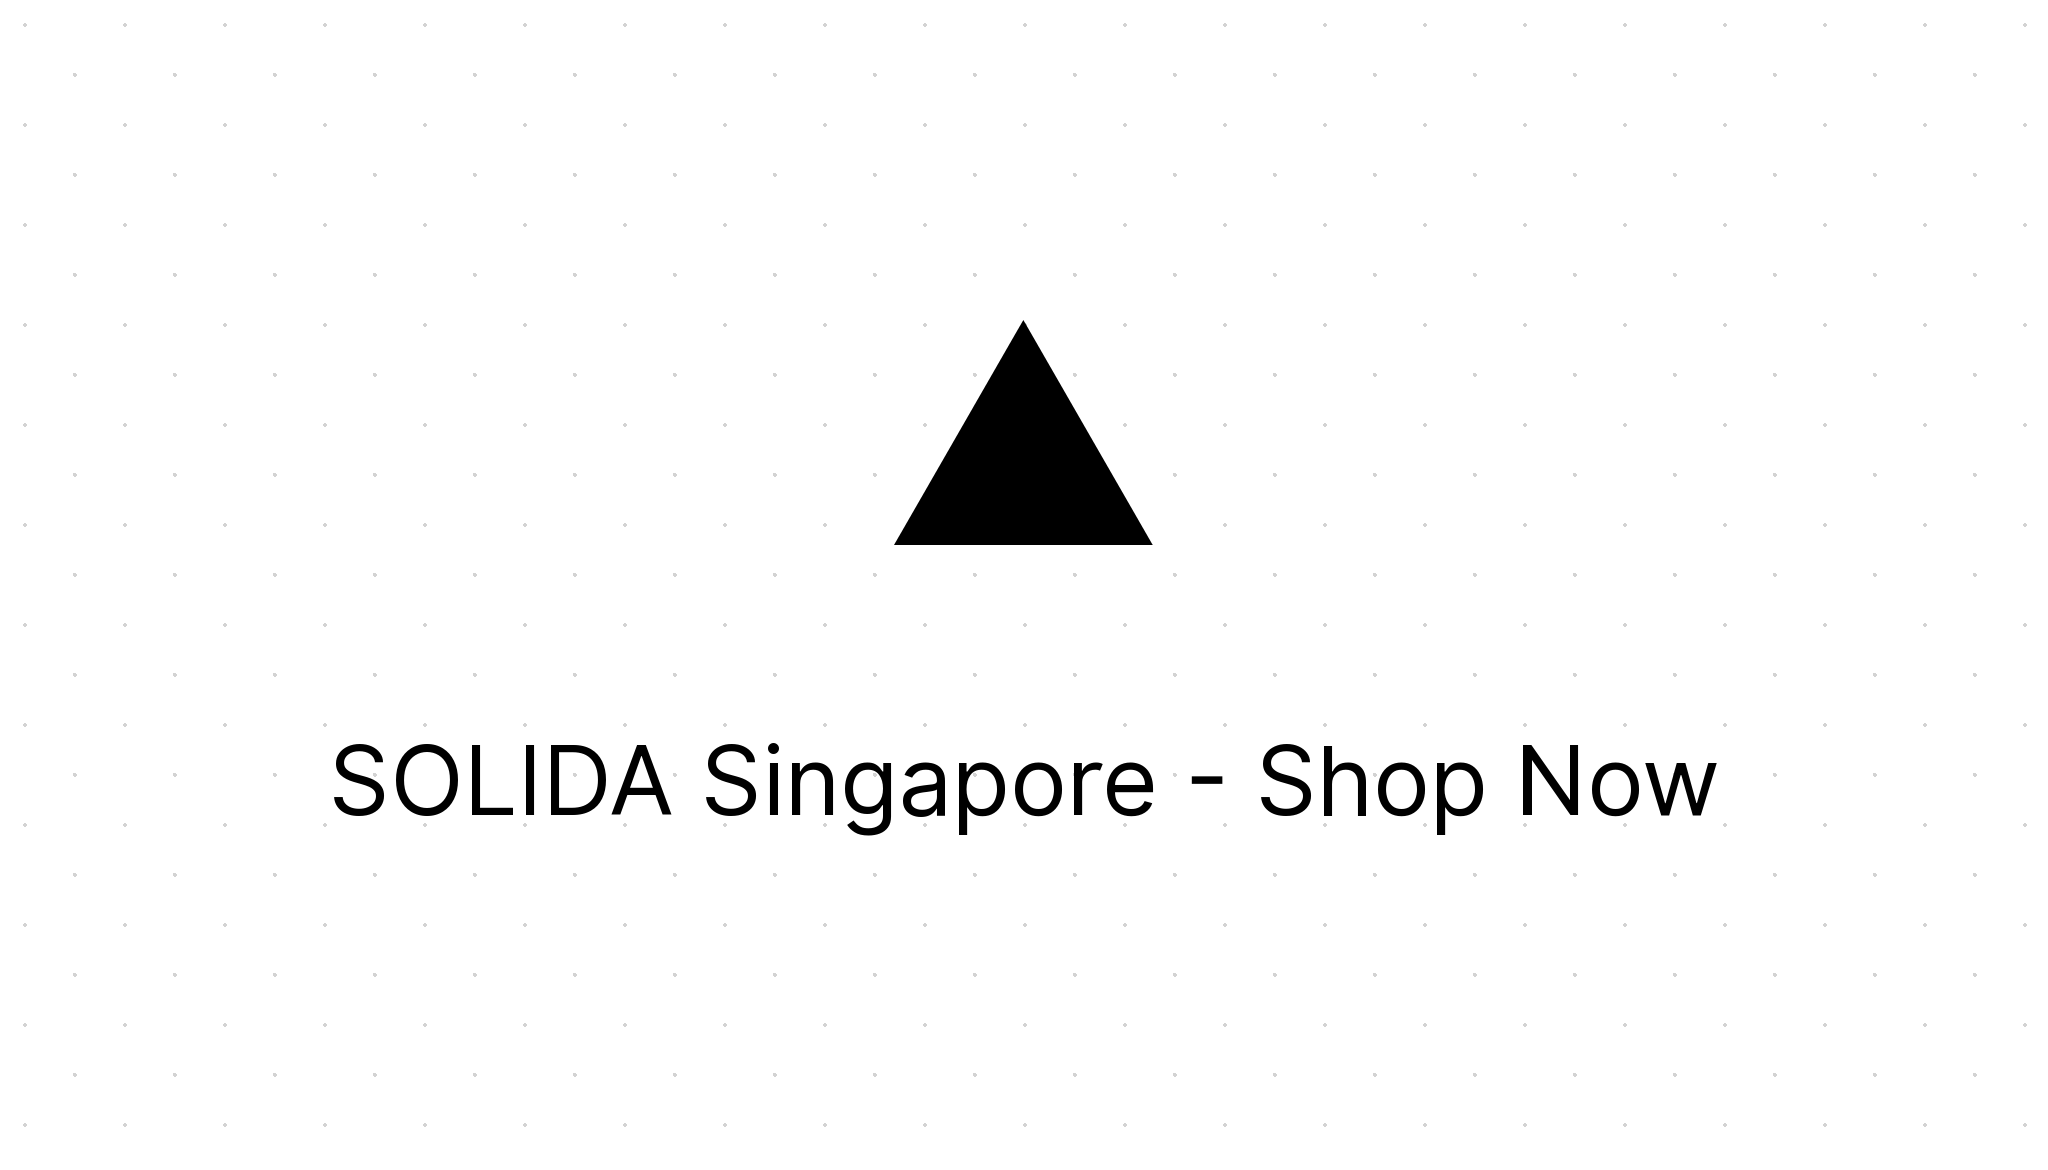 solida-singapore-shop-now-eezee